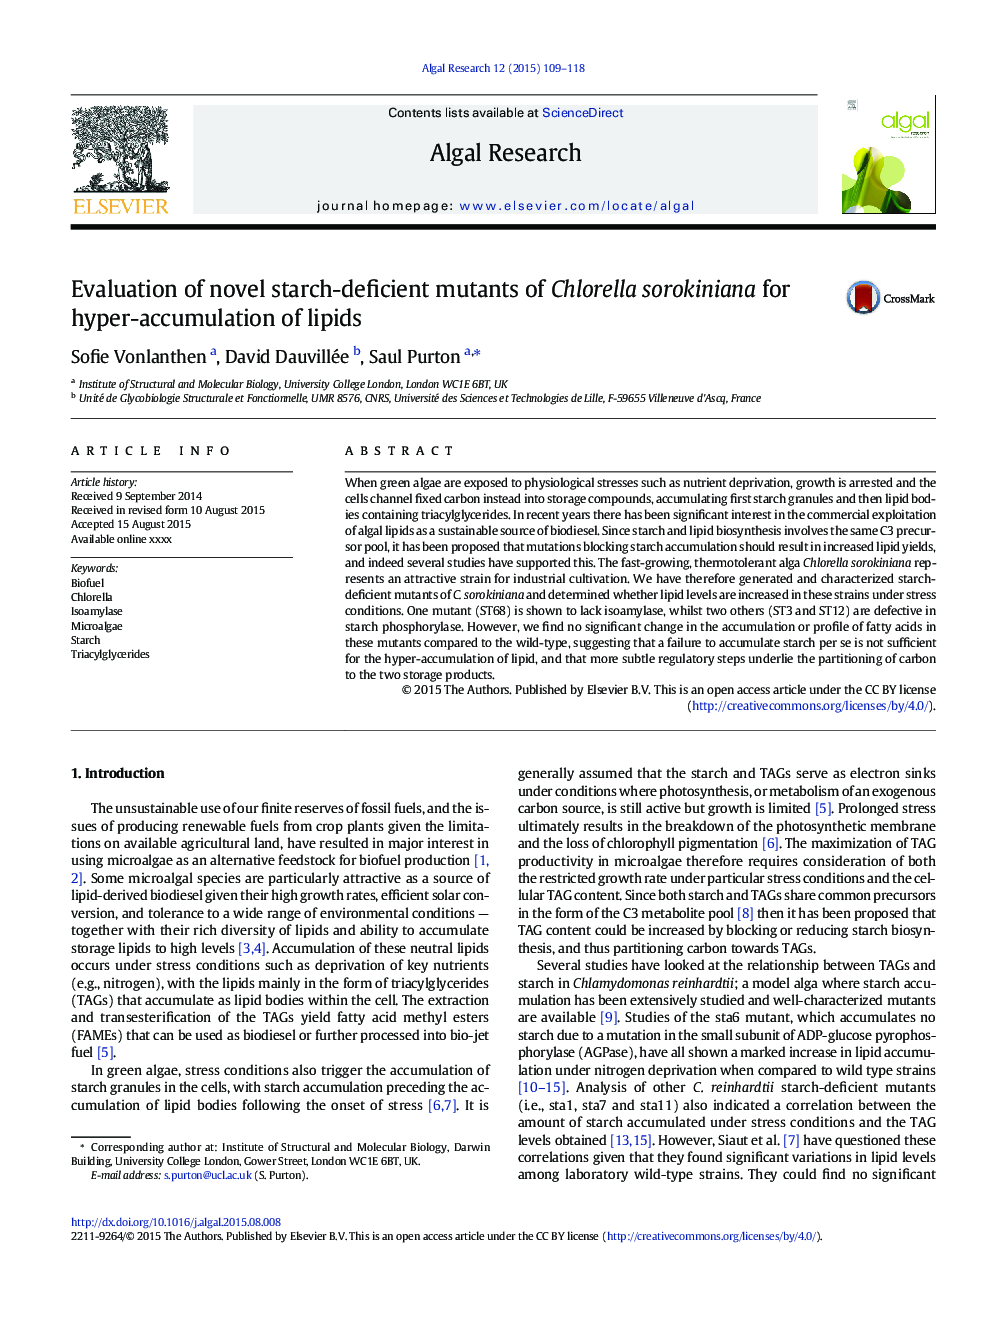 Evaluation of novel starch-deficient mutants of Chlorella sorokiniana for hyper-accumulation of lipids